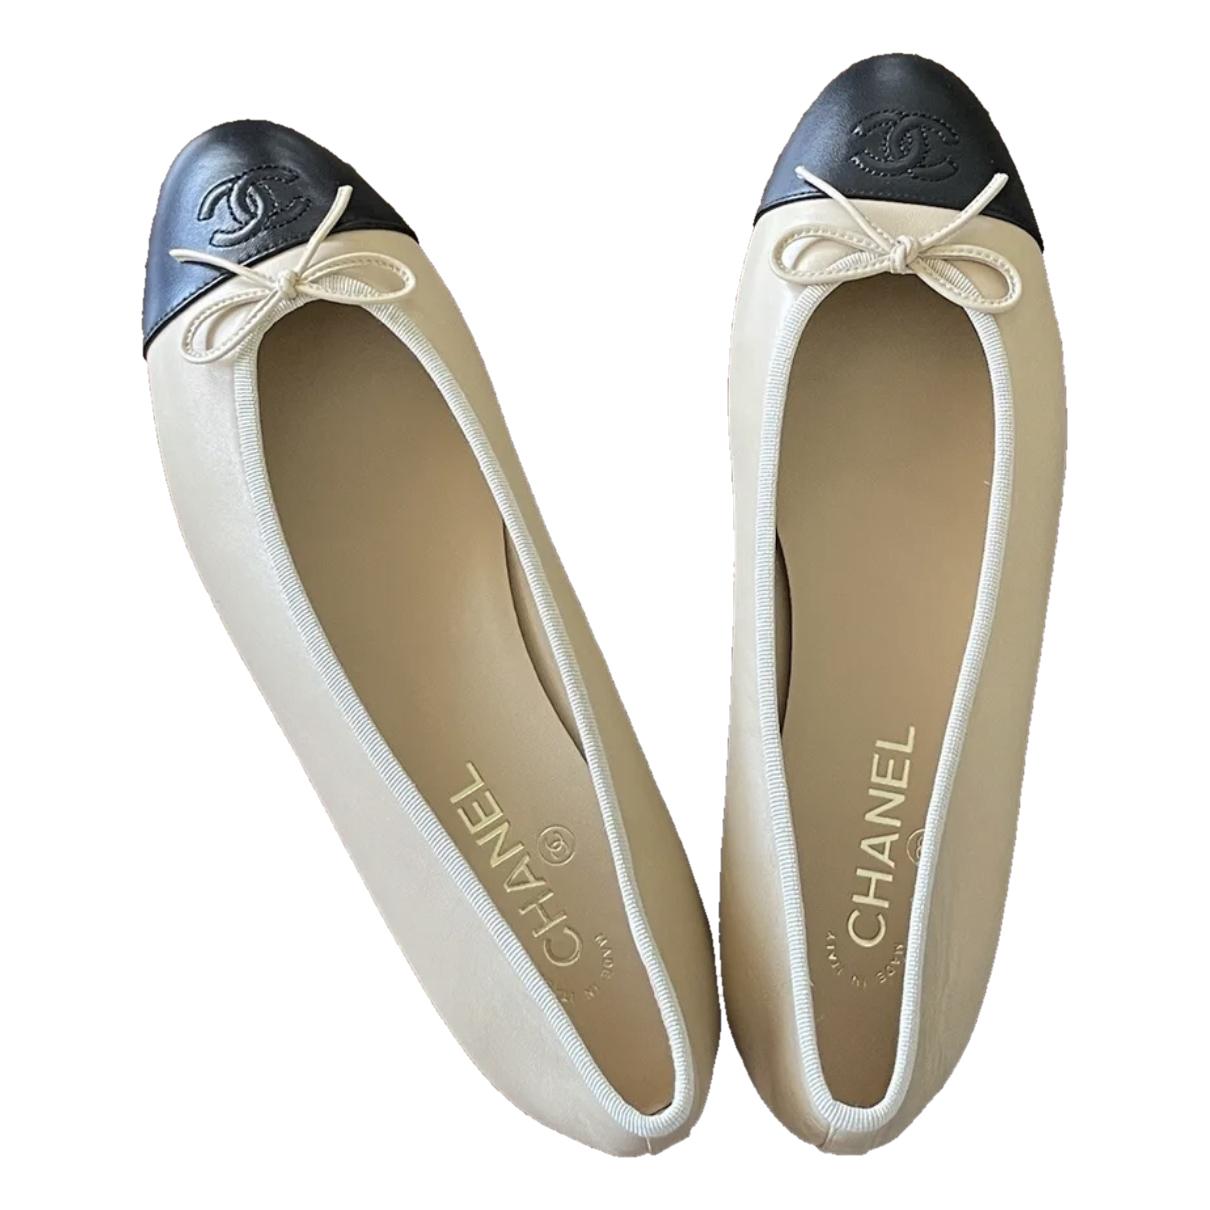 Chanel Blue Goatskin Leather CC Cap Toe Ballet Flats Size 5.5/36